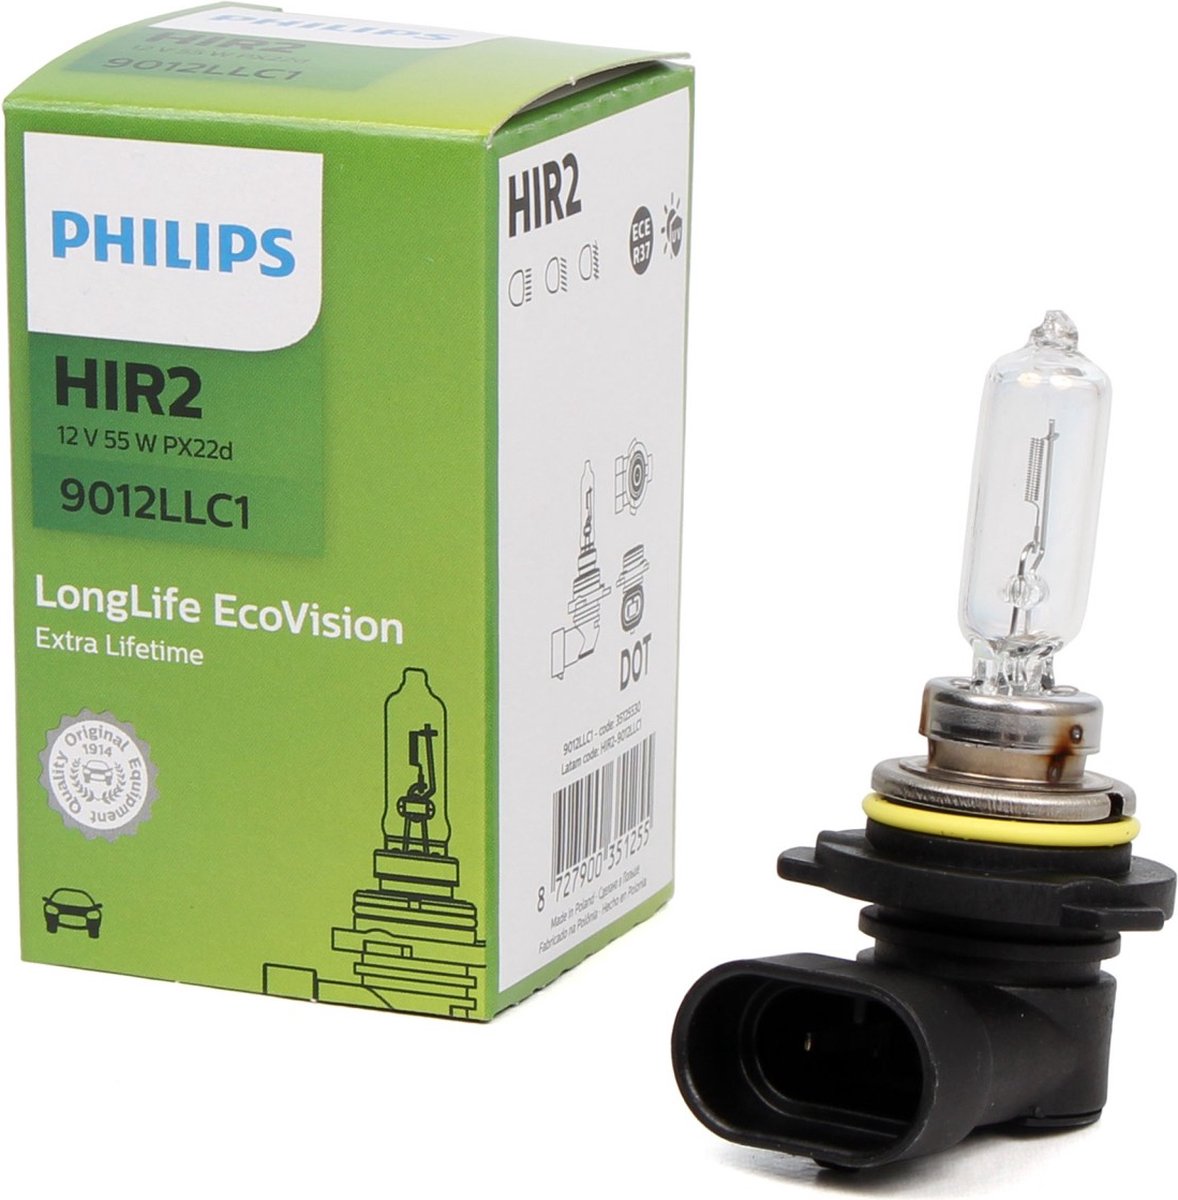 Philips Gloeilamp, HIR2 Longlife EcoVision bol.com